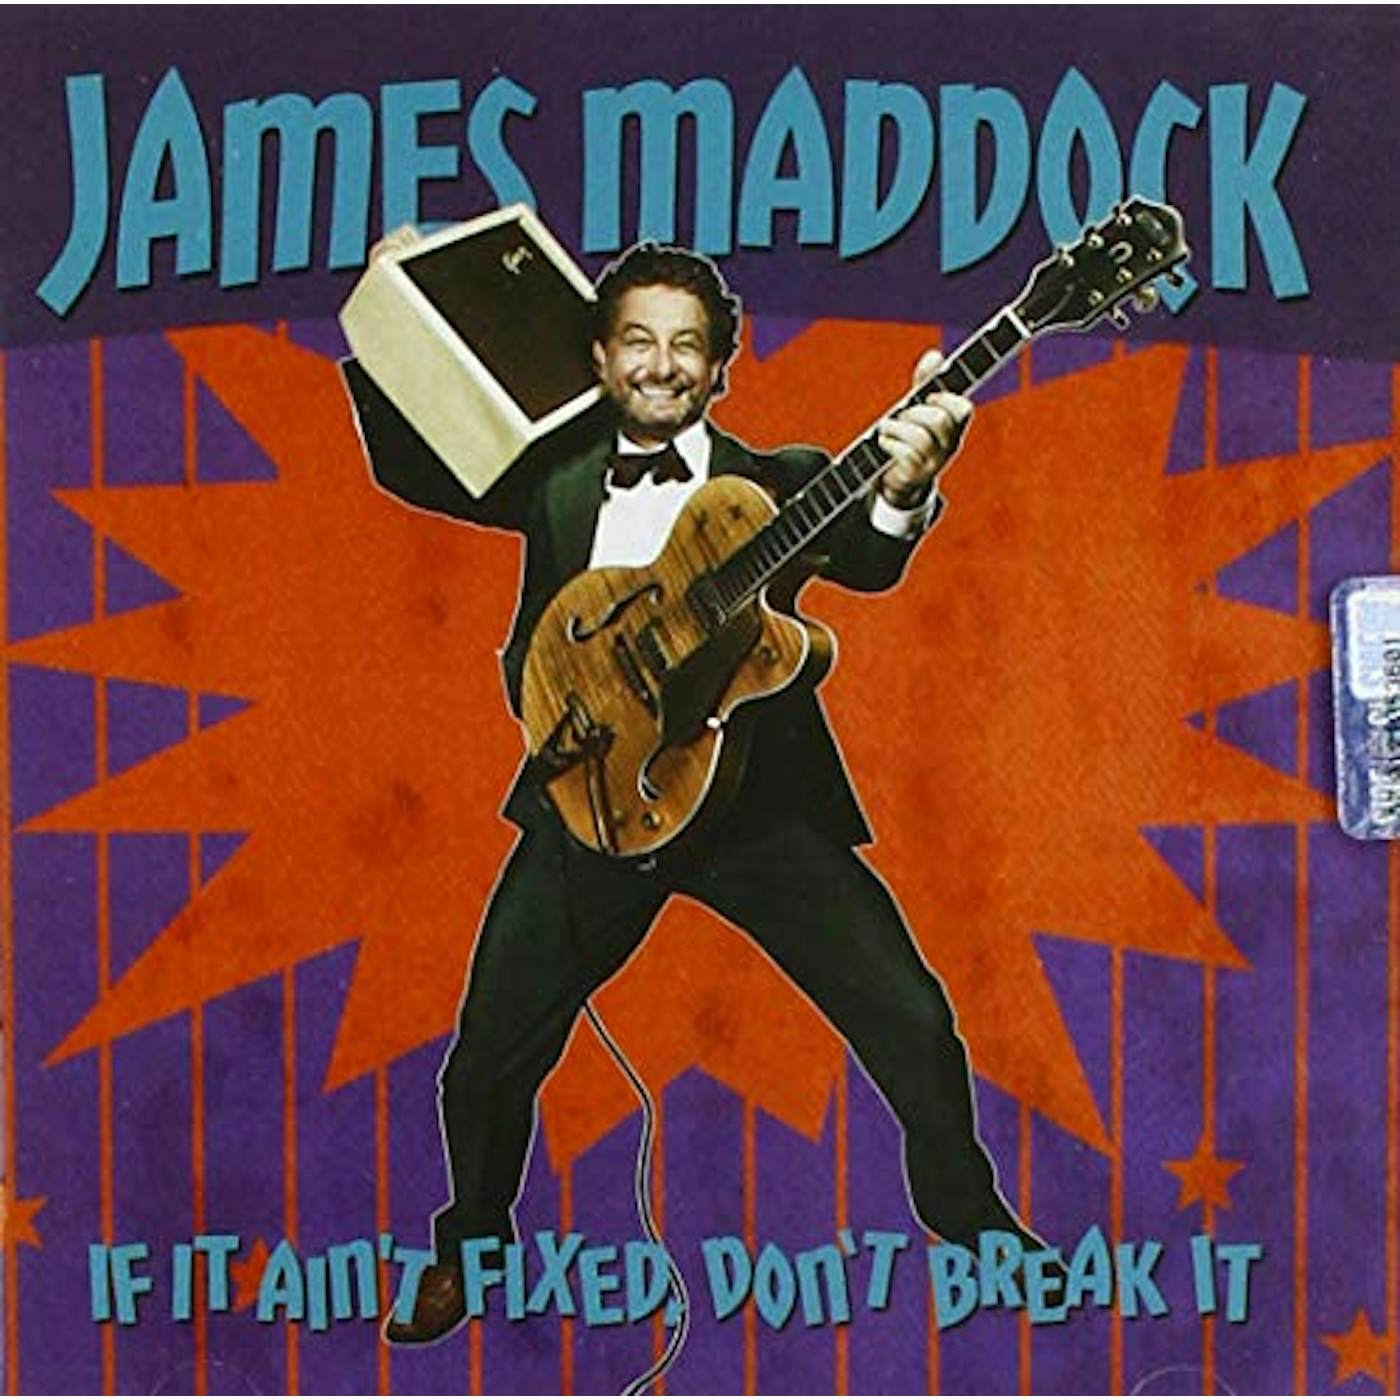 James Maddock IF IT AIN'T FIXED DON'T BREAK IT CD